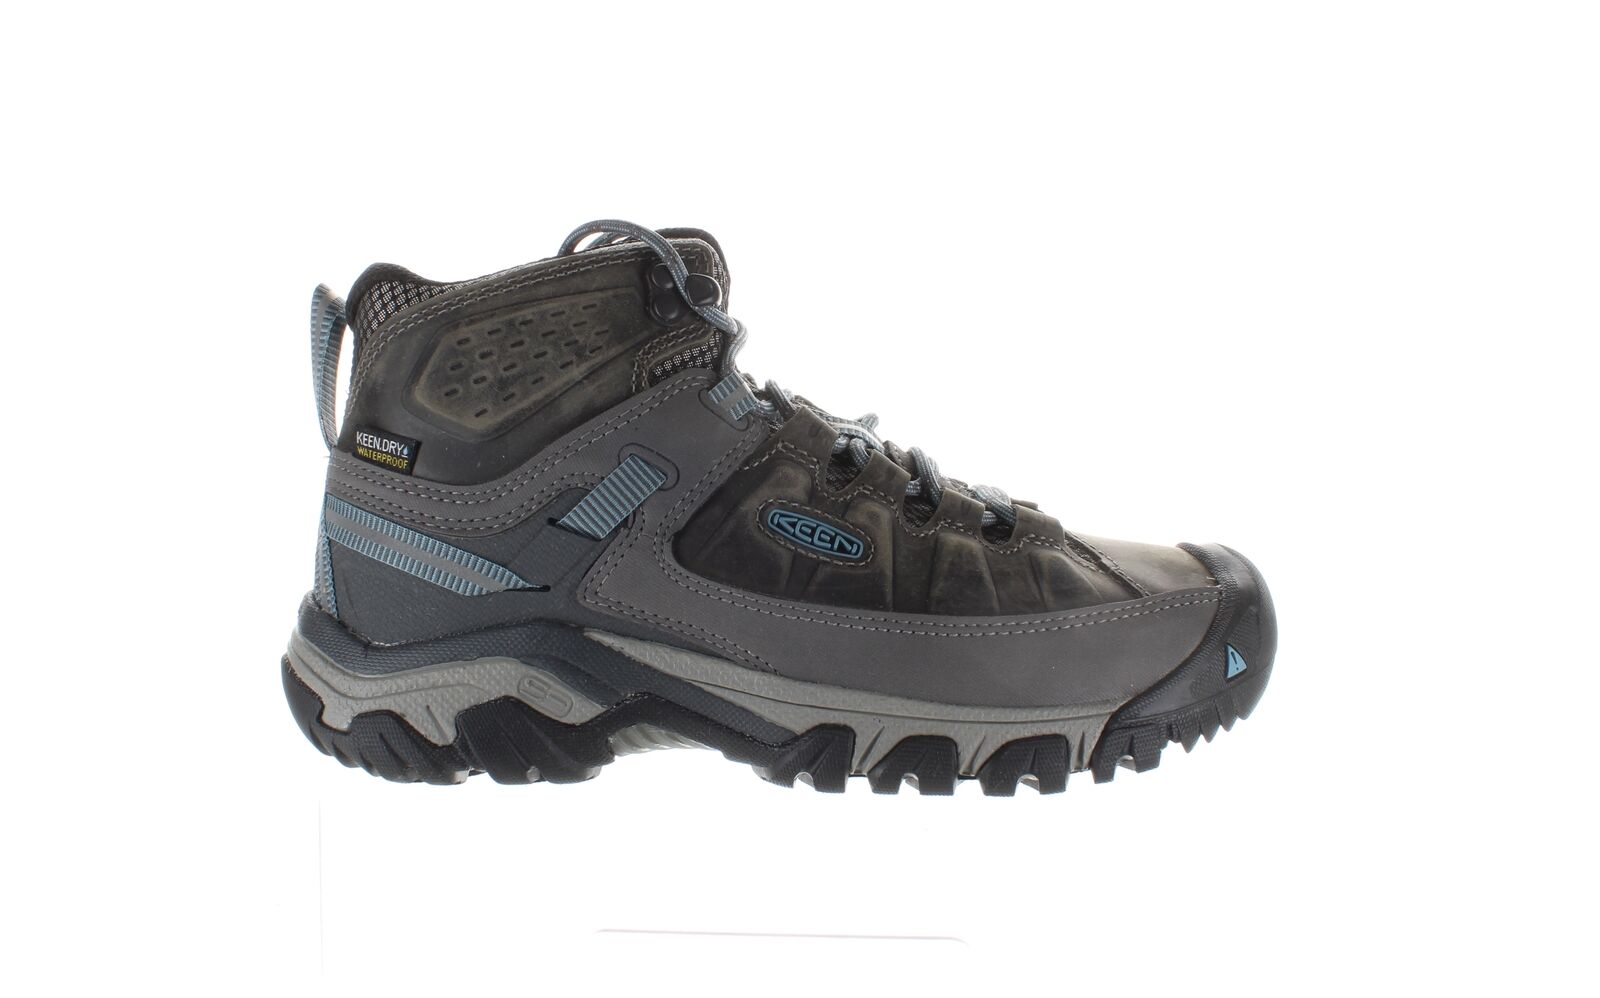 KEEN Womens Targhee 3 Magnet/Atlantic Blue Hiking Boots Size 7 (2241882)